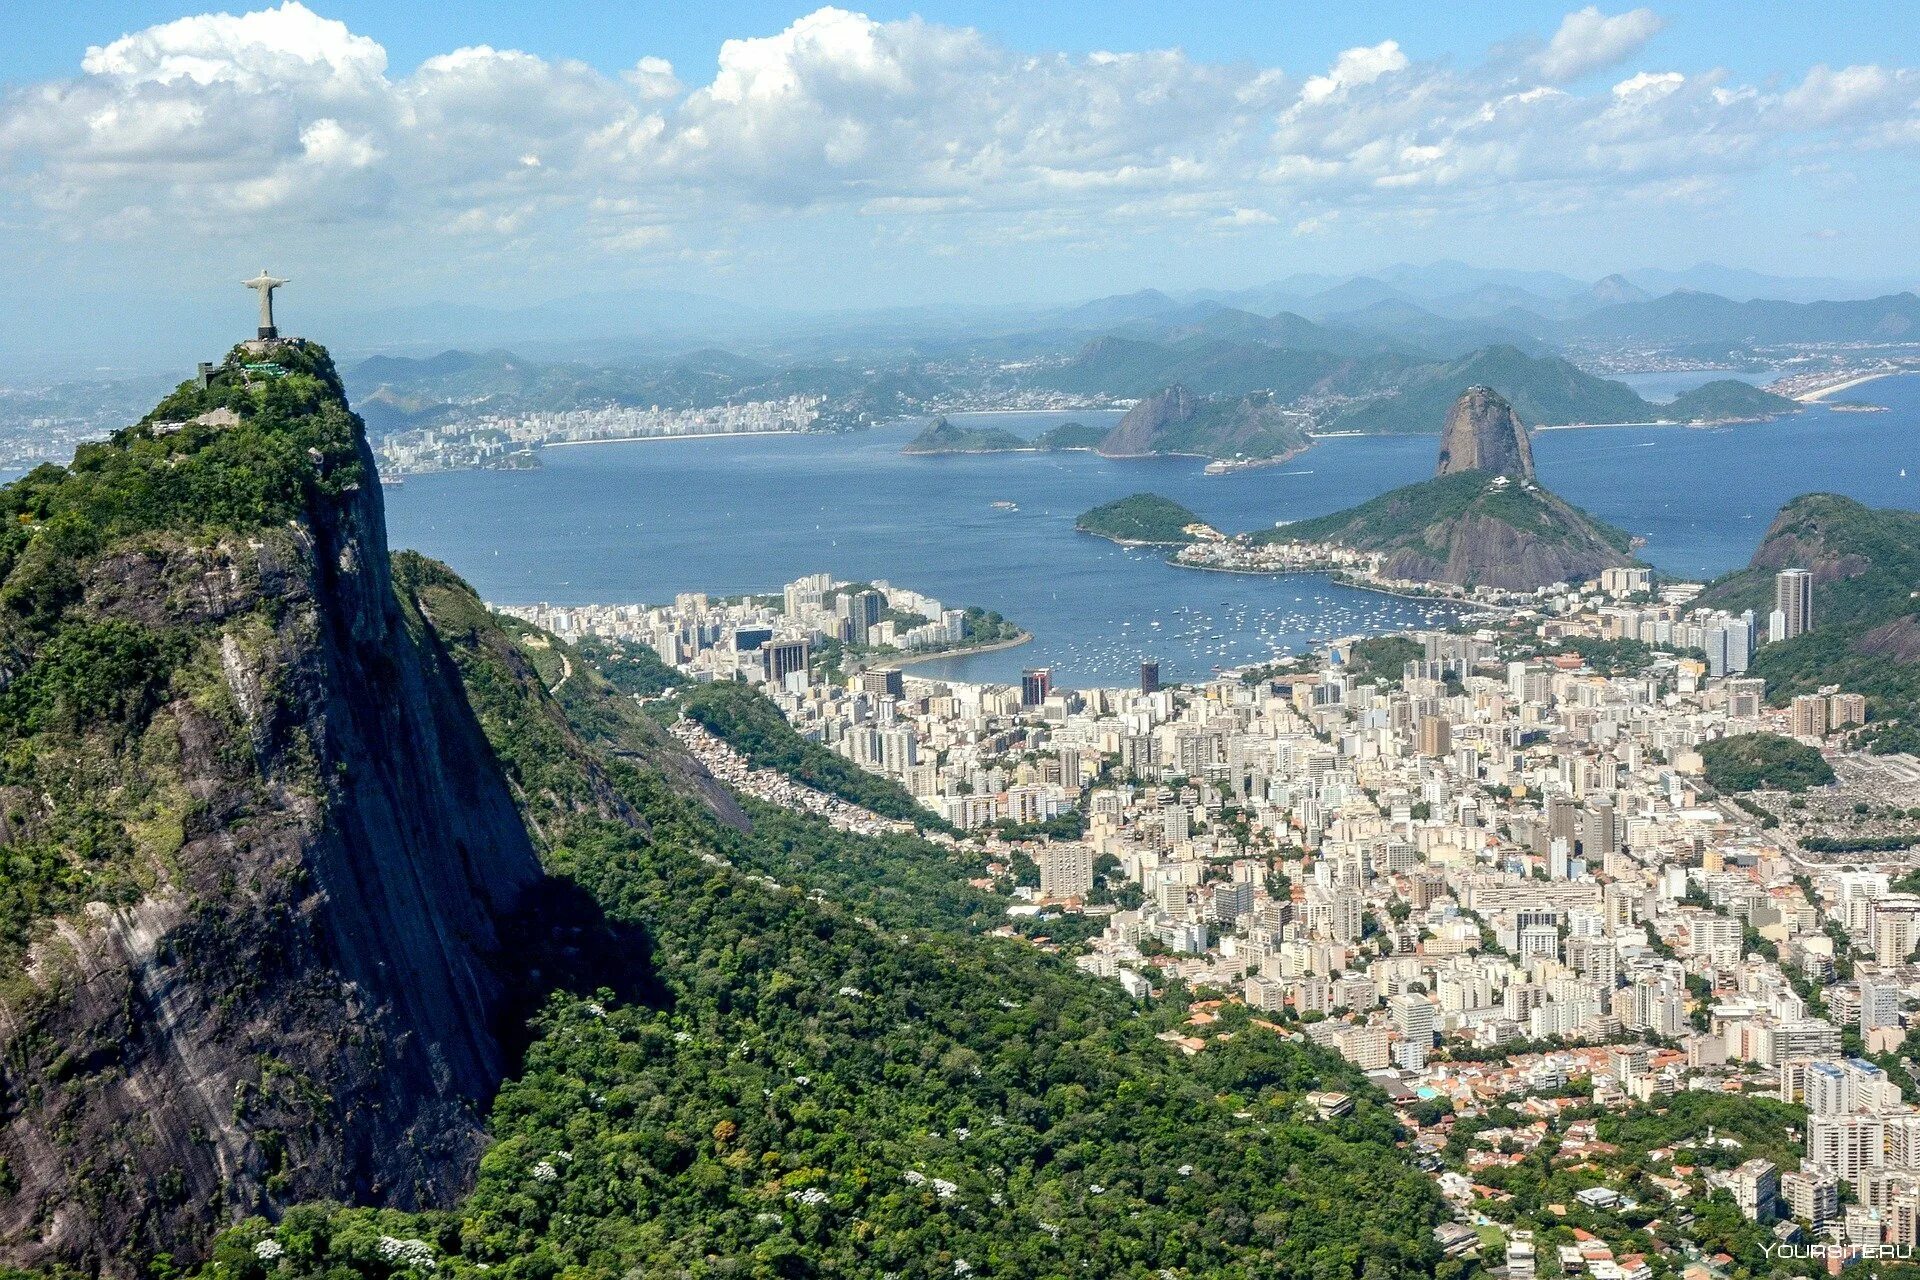 Country brazil. Залив Гуанабара в Рио-де-Жанейро. Достопримечательности Рио-де-Жанейро Бразилия. Пан-ди-Асукар Рио-де-Жанейро. Гора сахарная голова Рио-де-Жанейро.